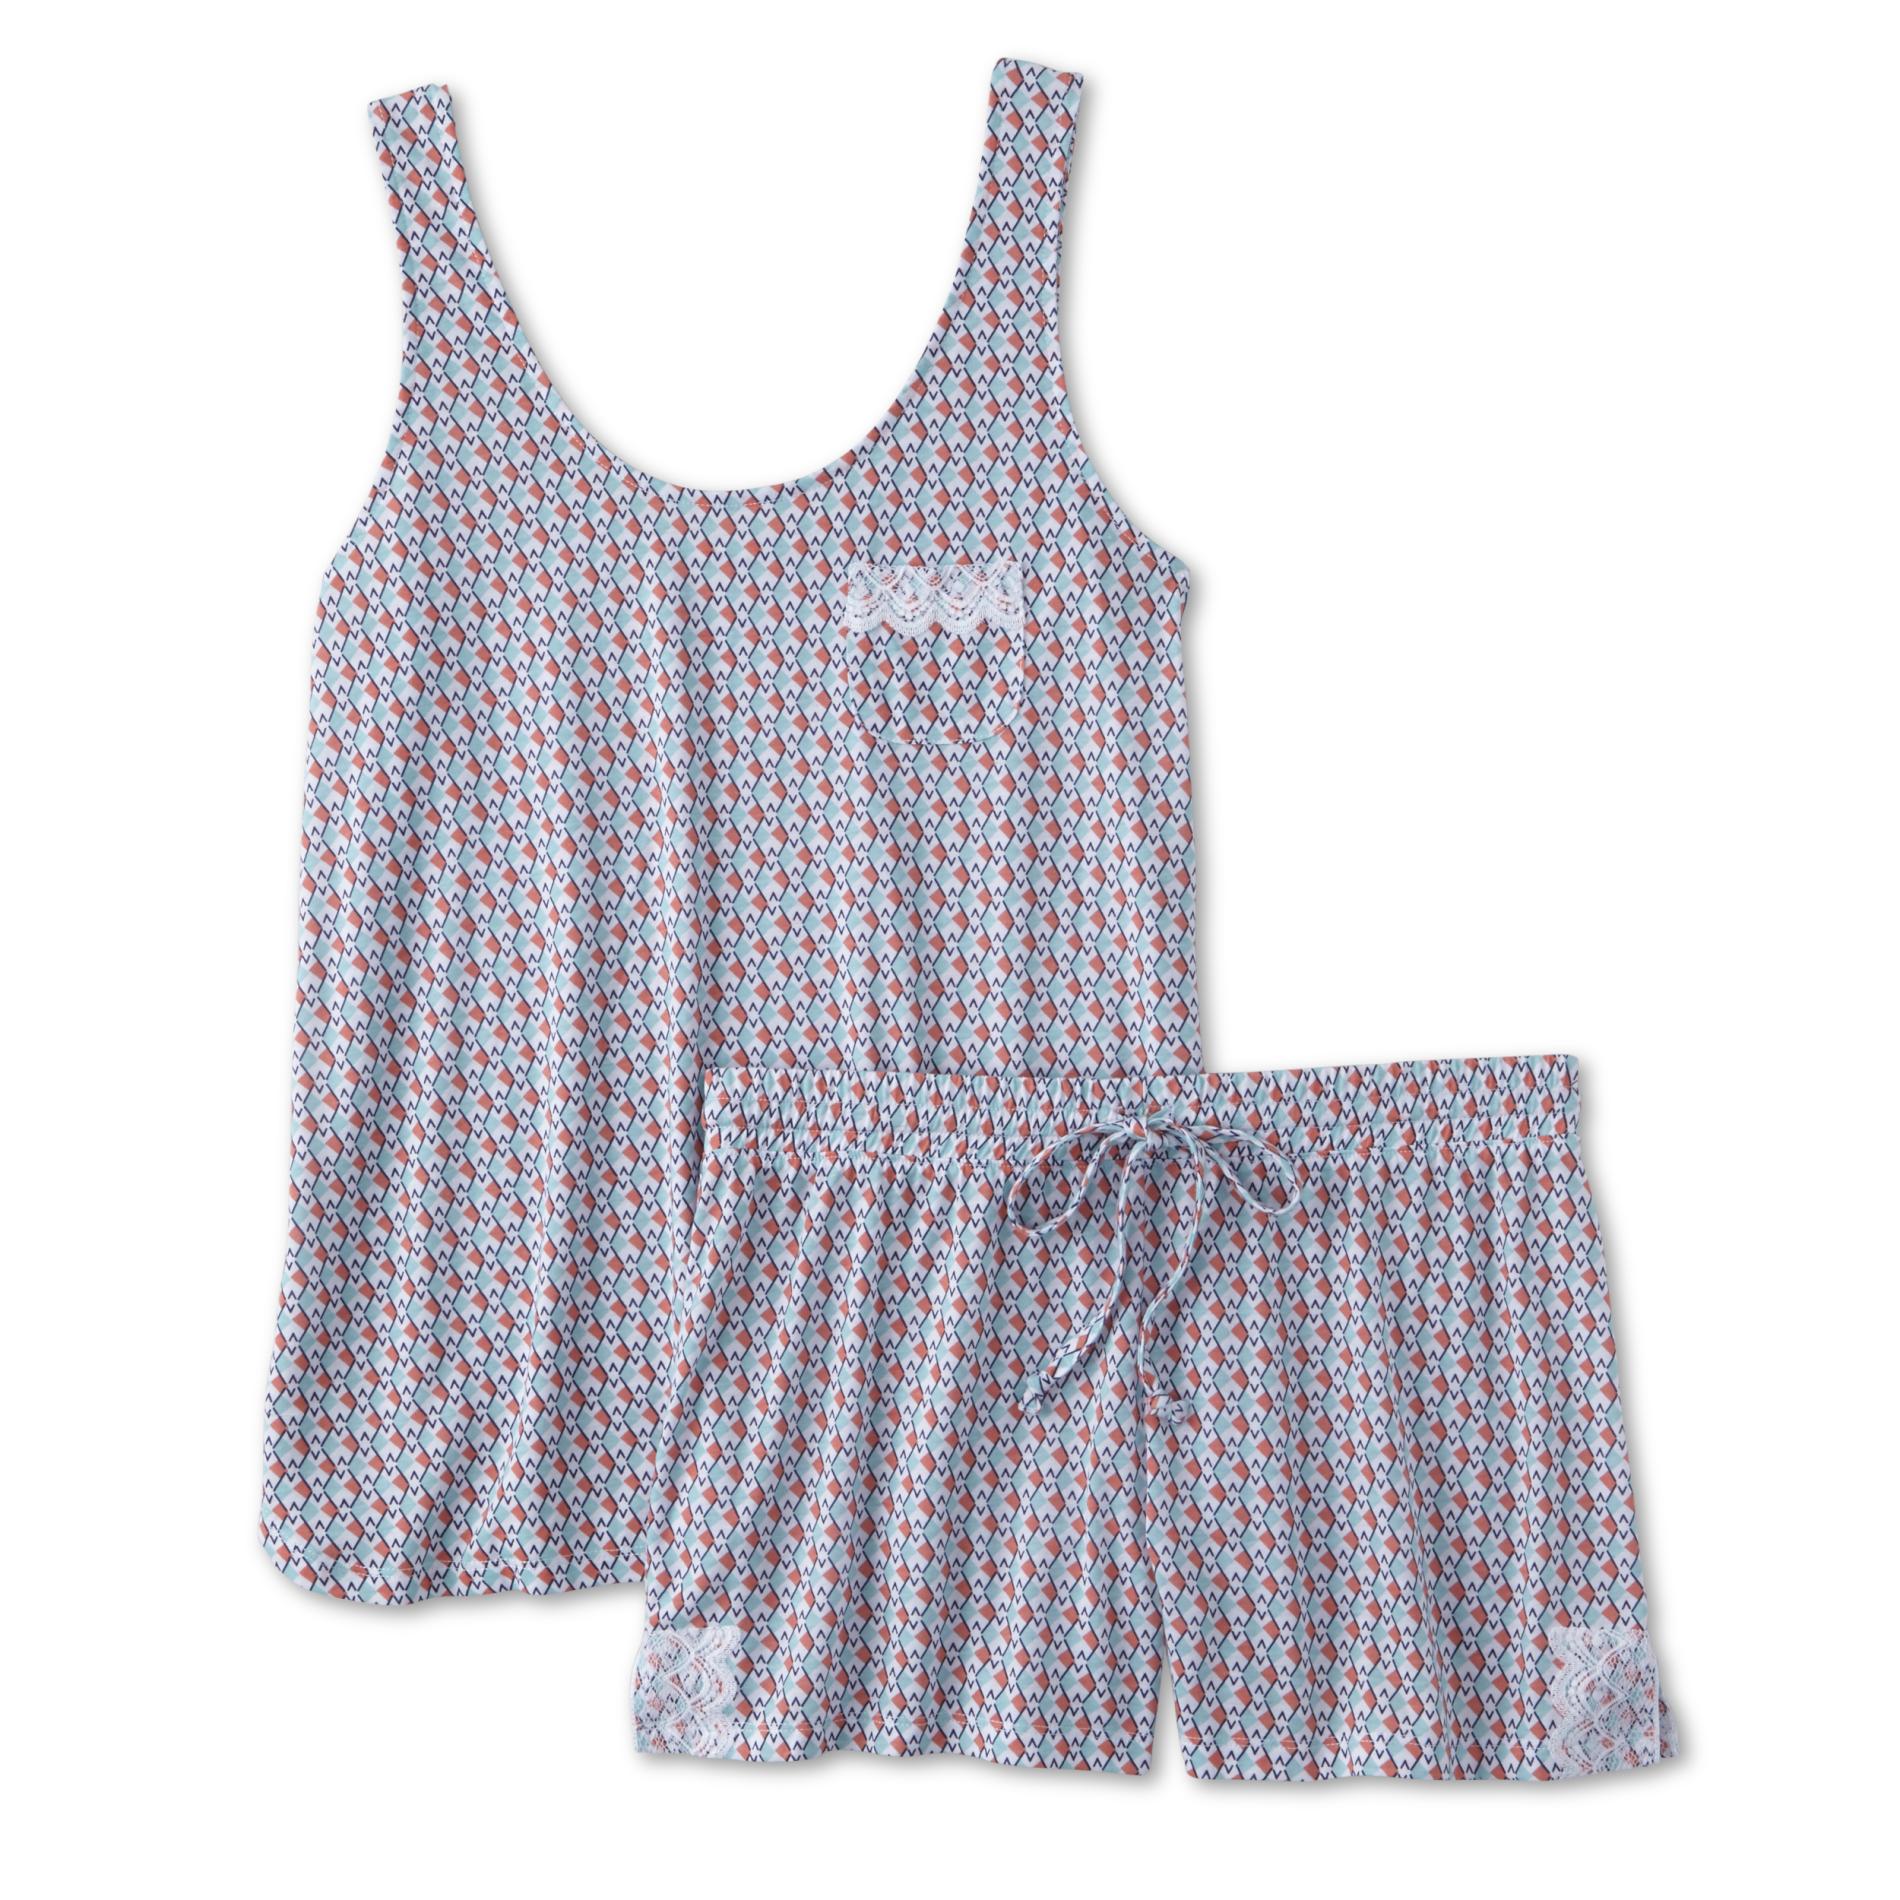 Simply Styled Women's Pajama Tank Top & Shorts - Geometric